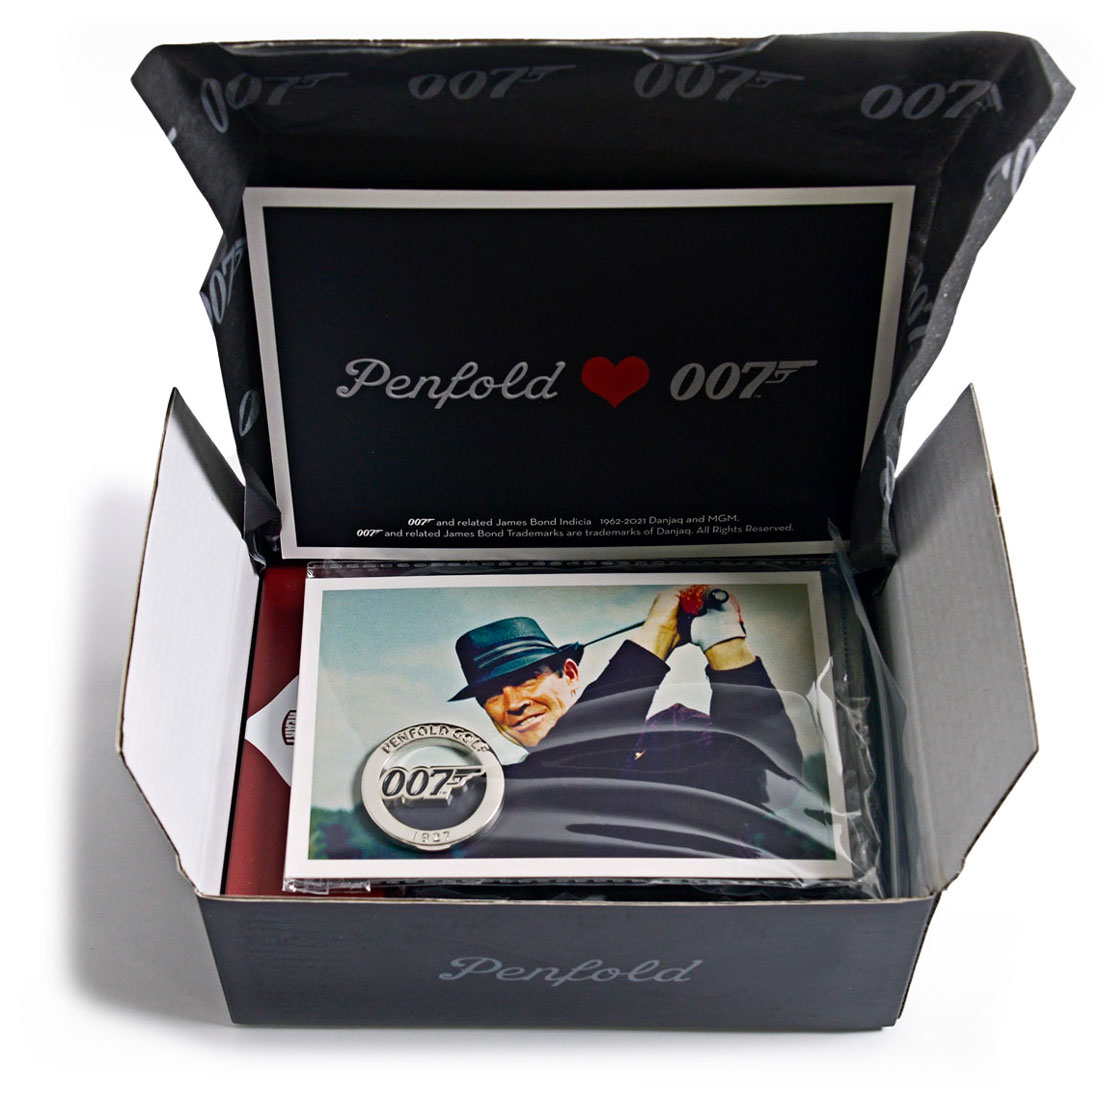 Penfold 007 box